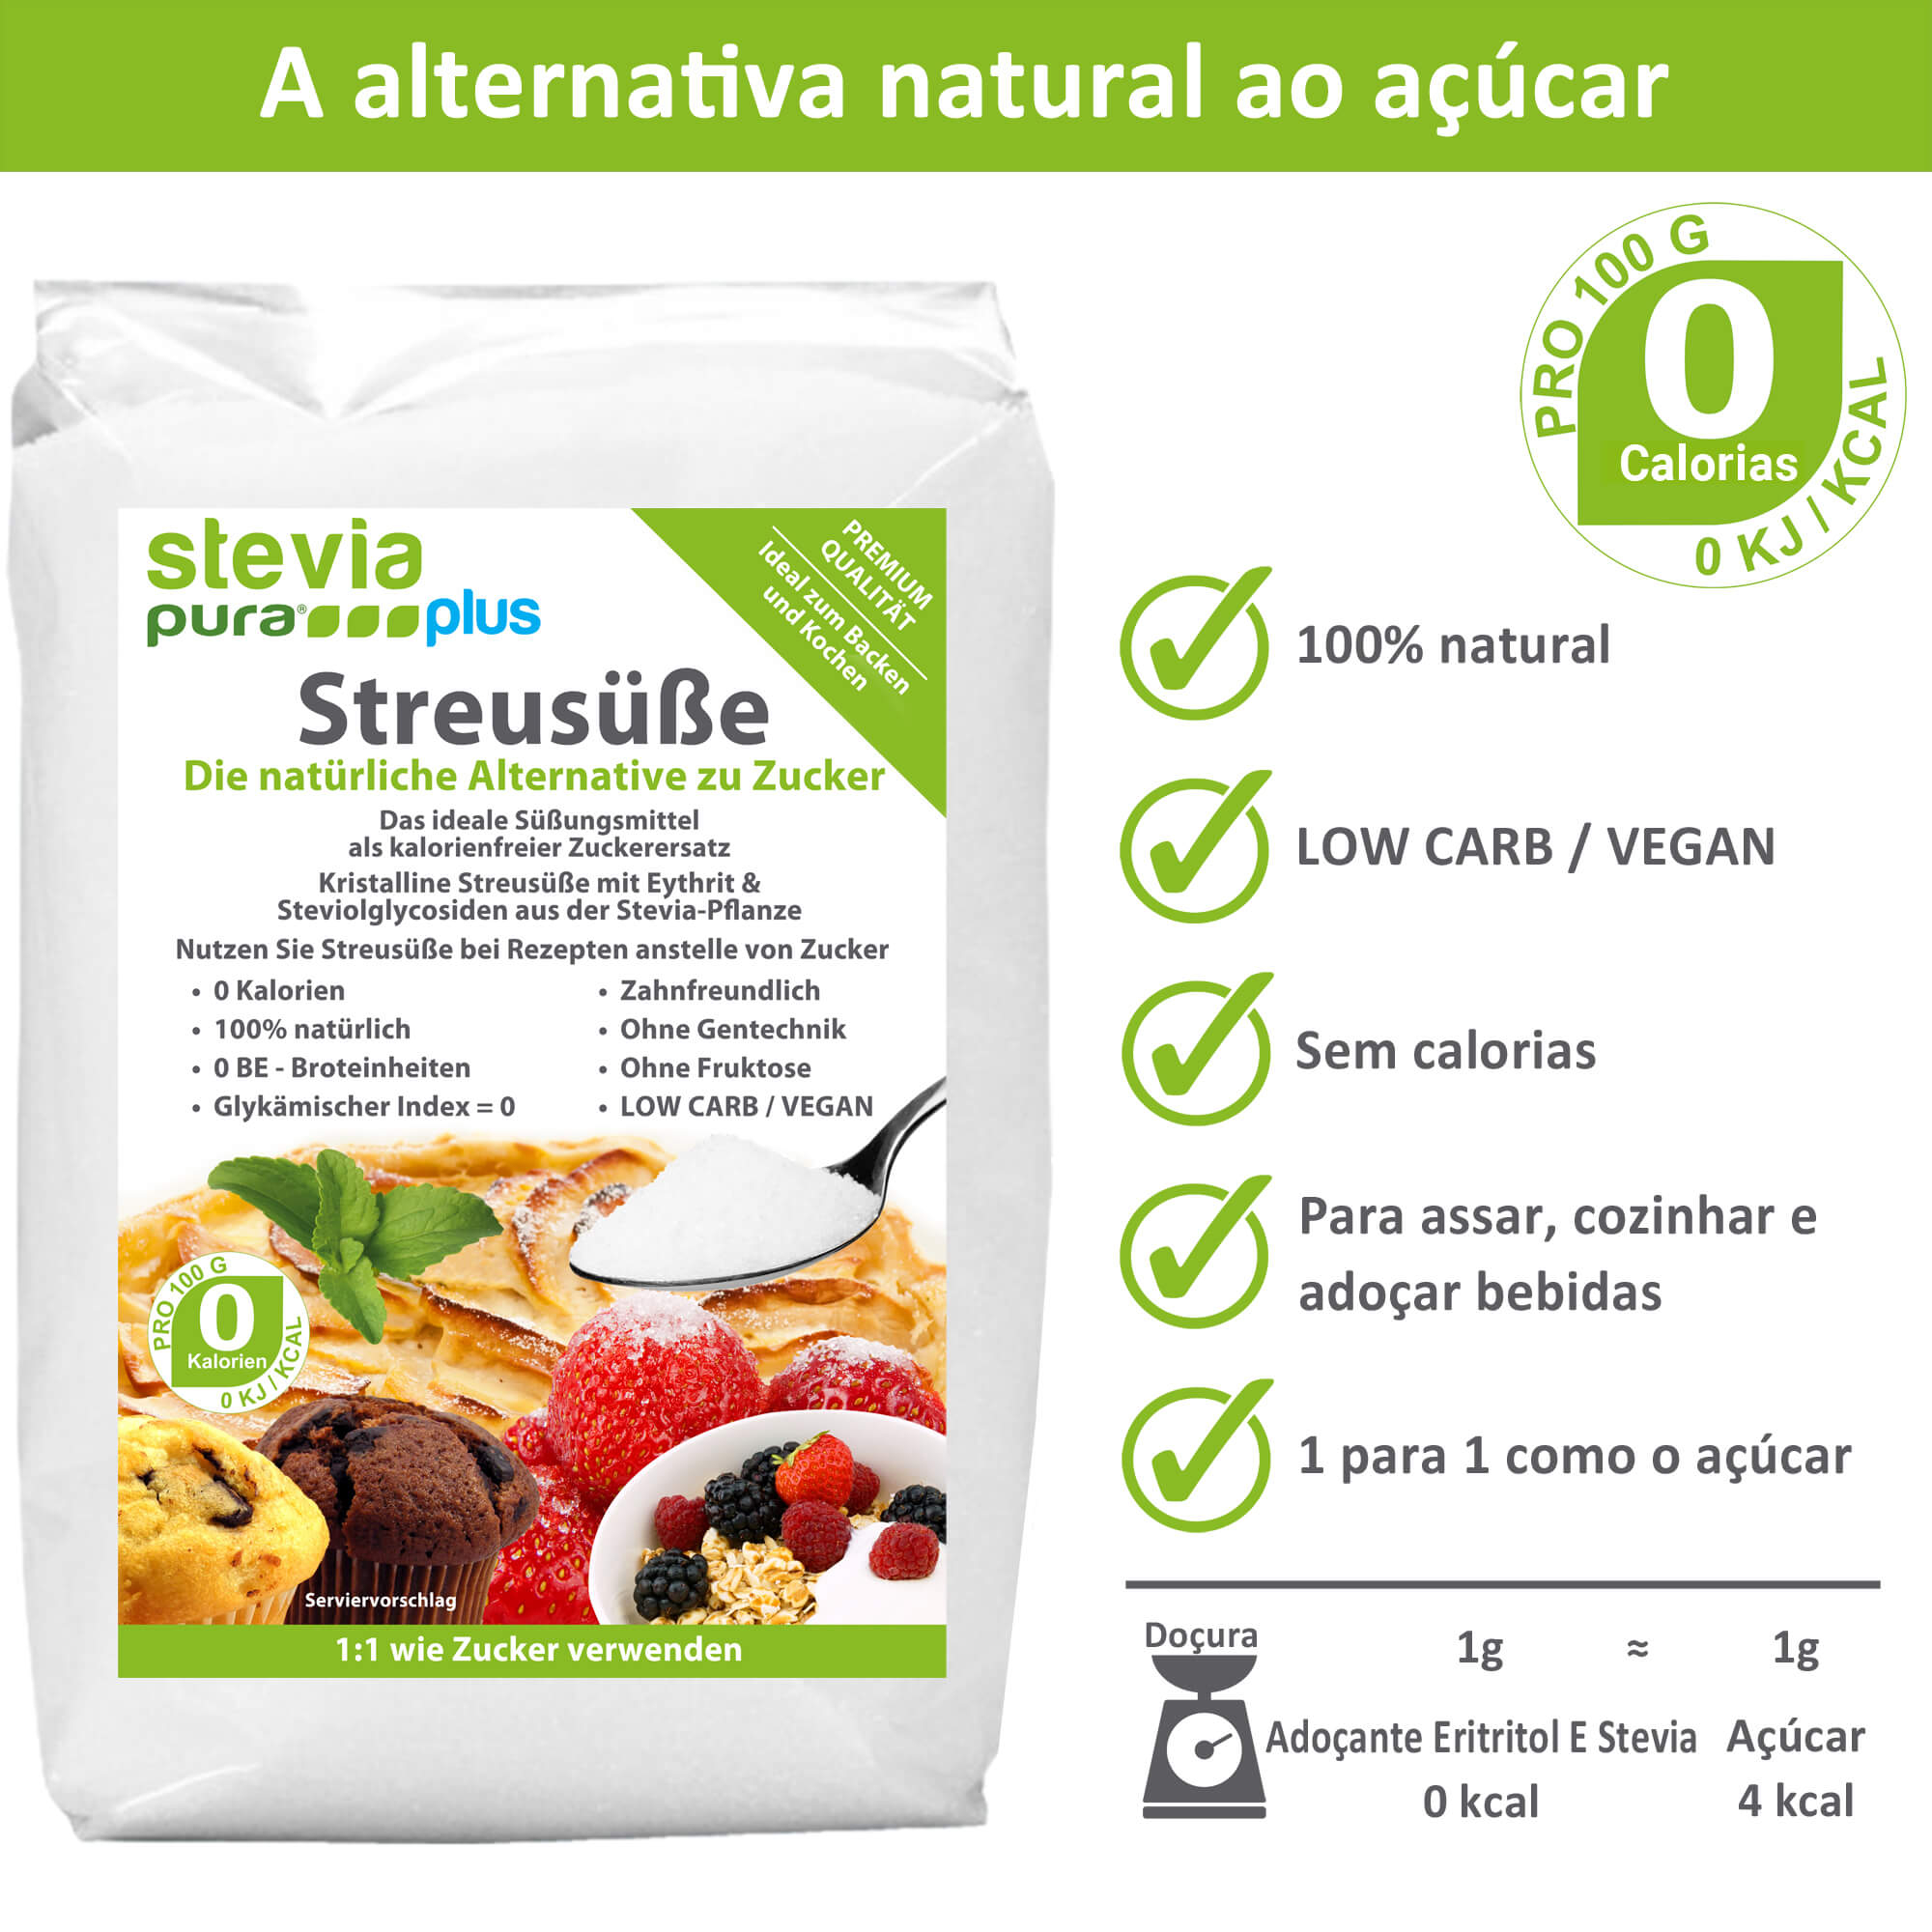 Stevia adoçante cristalino - As vantagens do substituto do açúcar adoçante Stevia